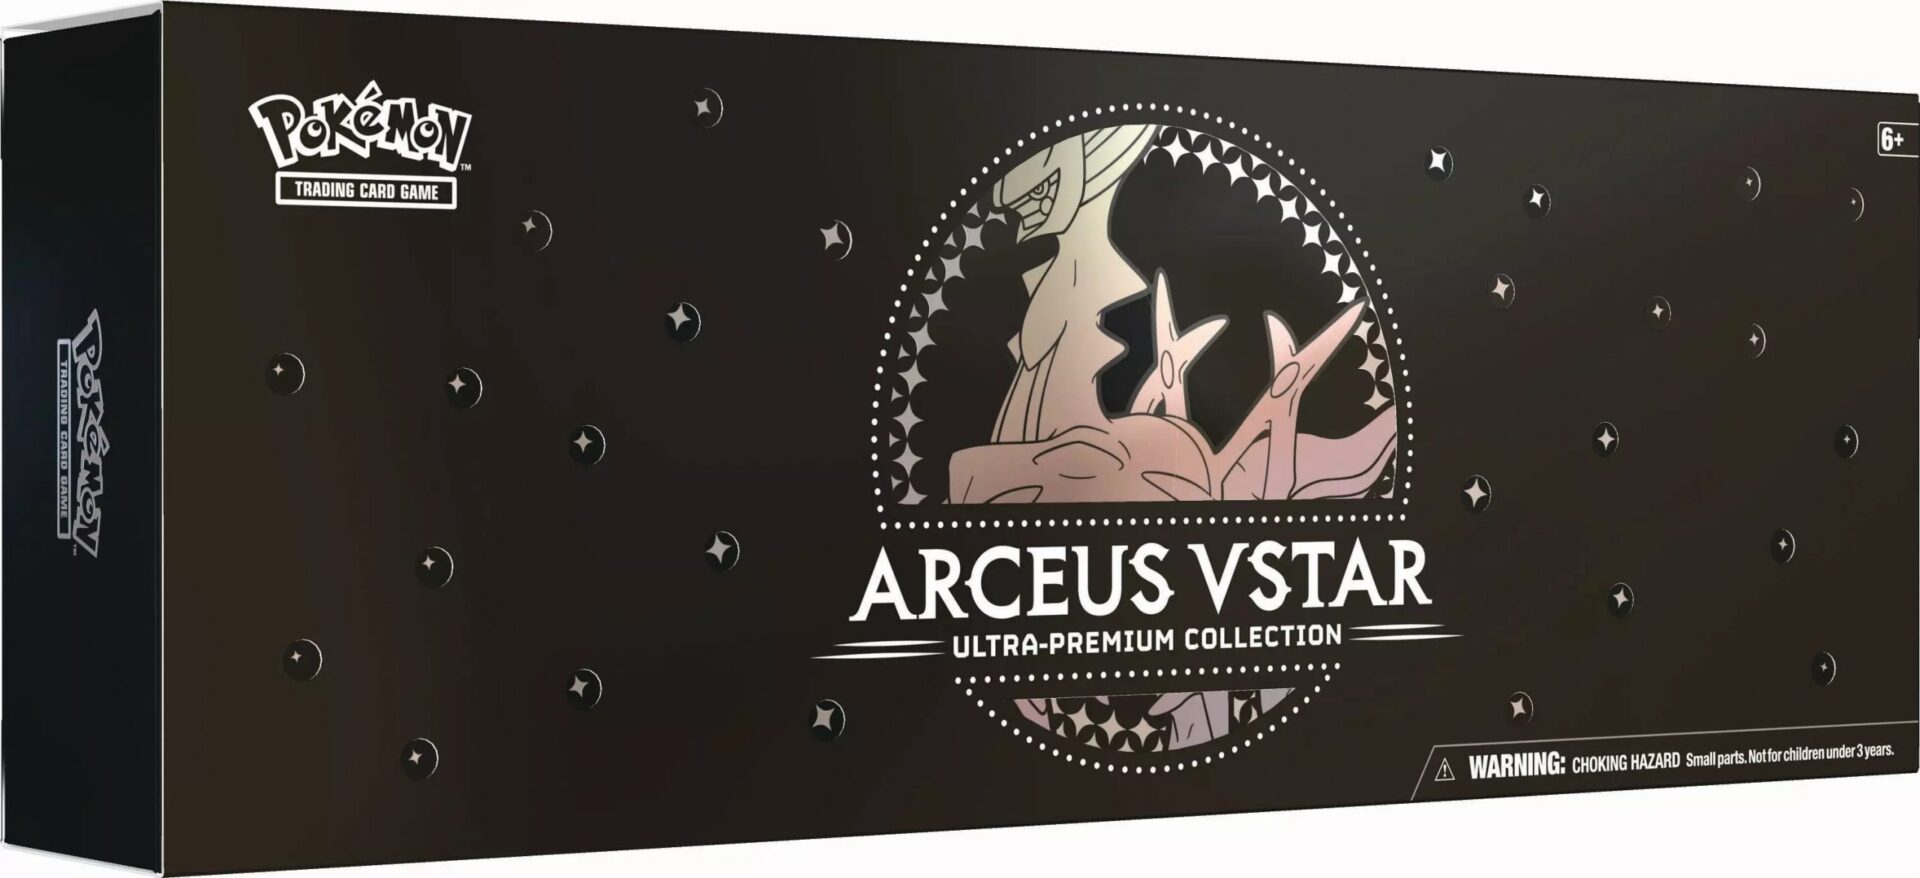 Arceus VSTAR Ultra Premium Collection製品画像や詳細が判明 